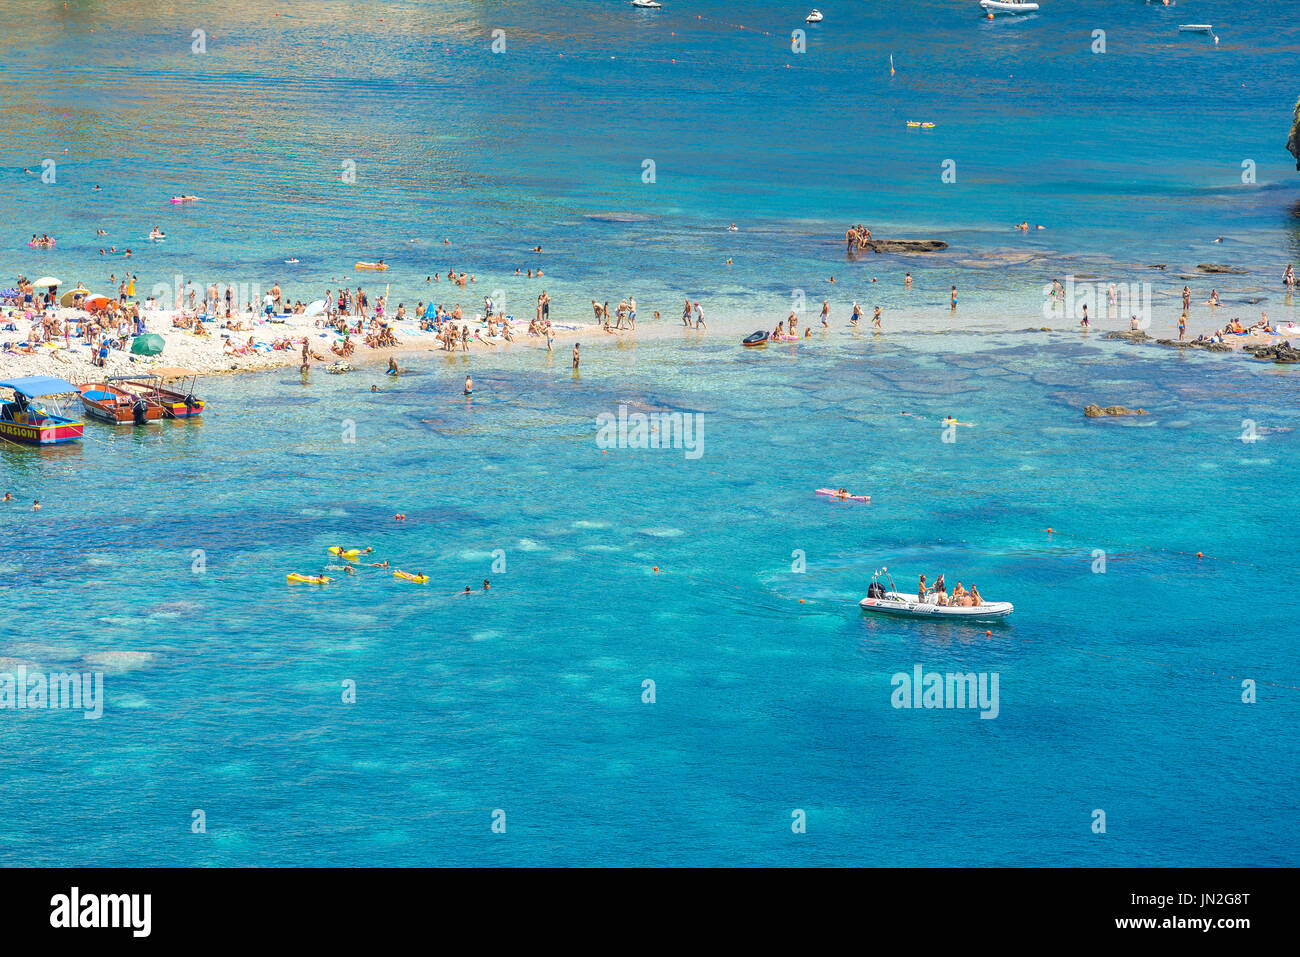 Sicily beach, view in summer of Sicilian people sunbathing in a scenic cove at Mazzaro beach near Taormina, Sicily. Stock Photo